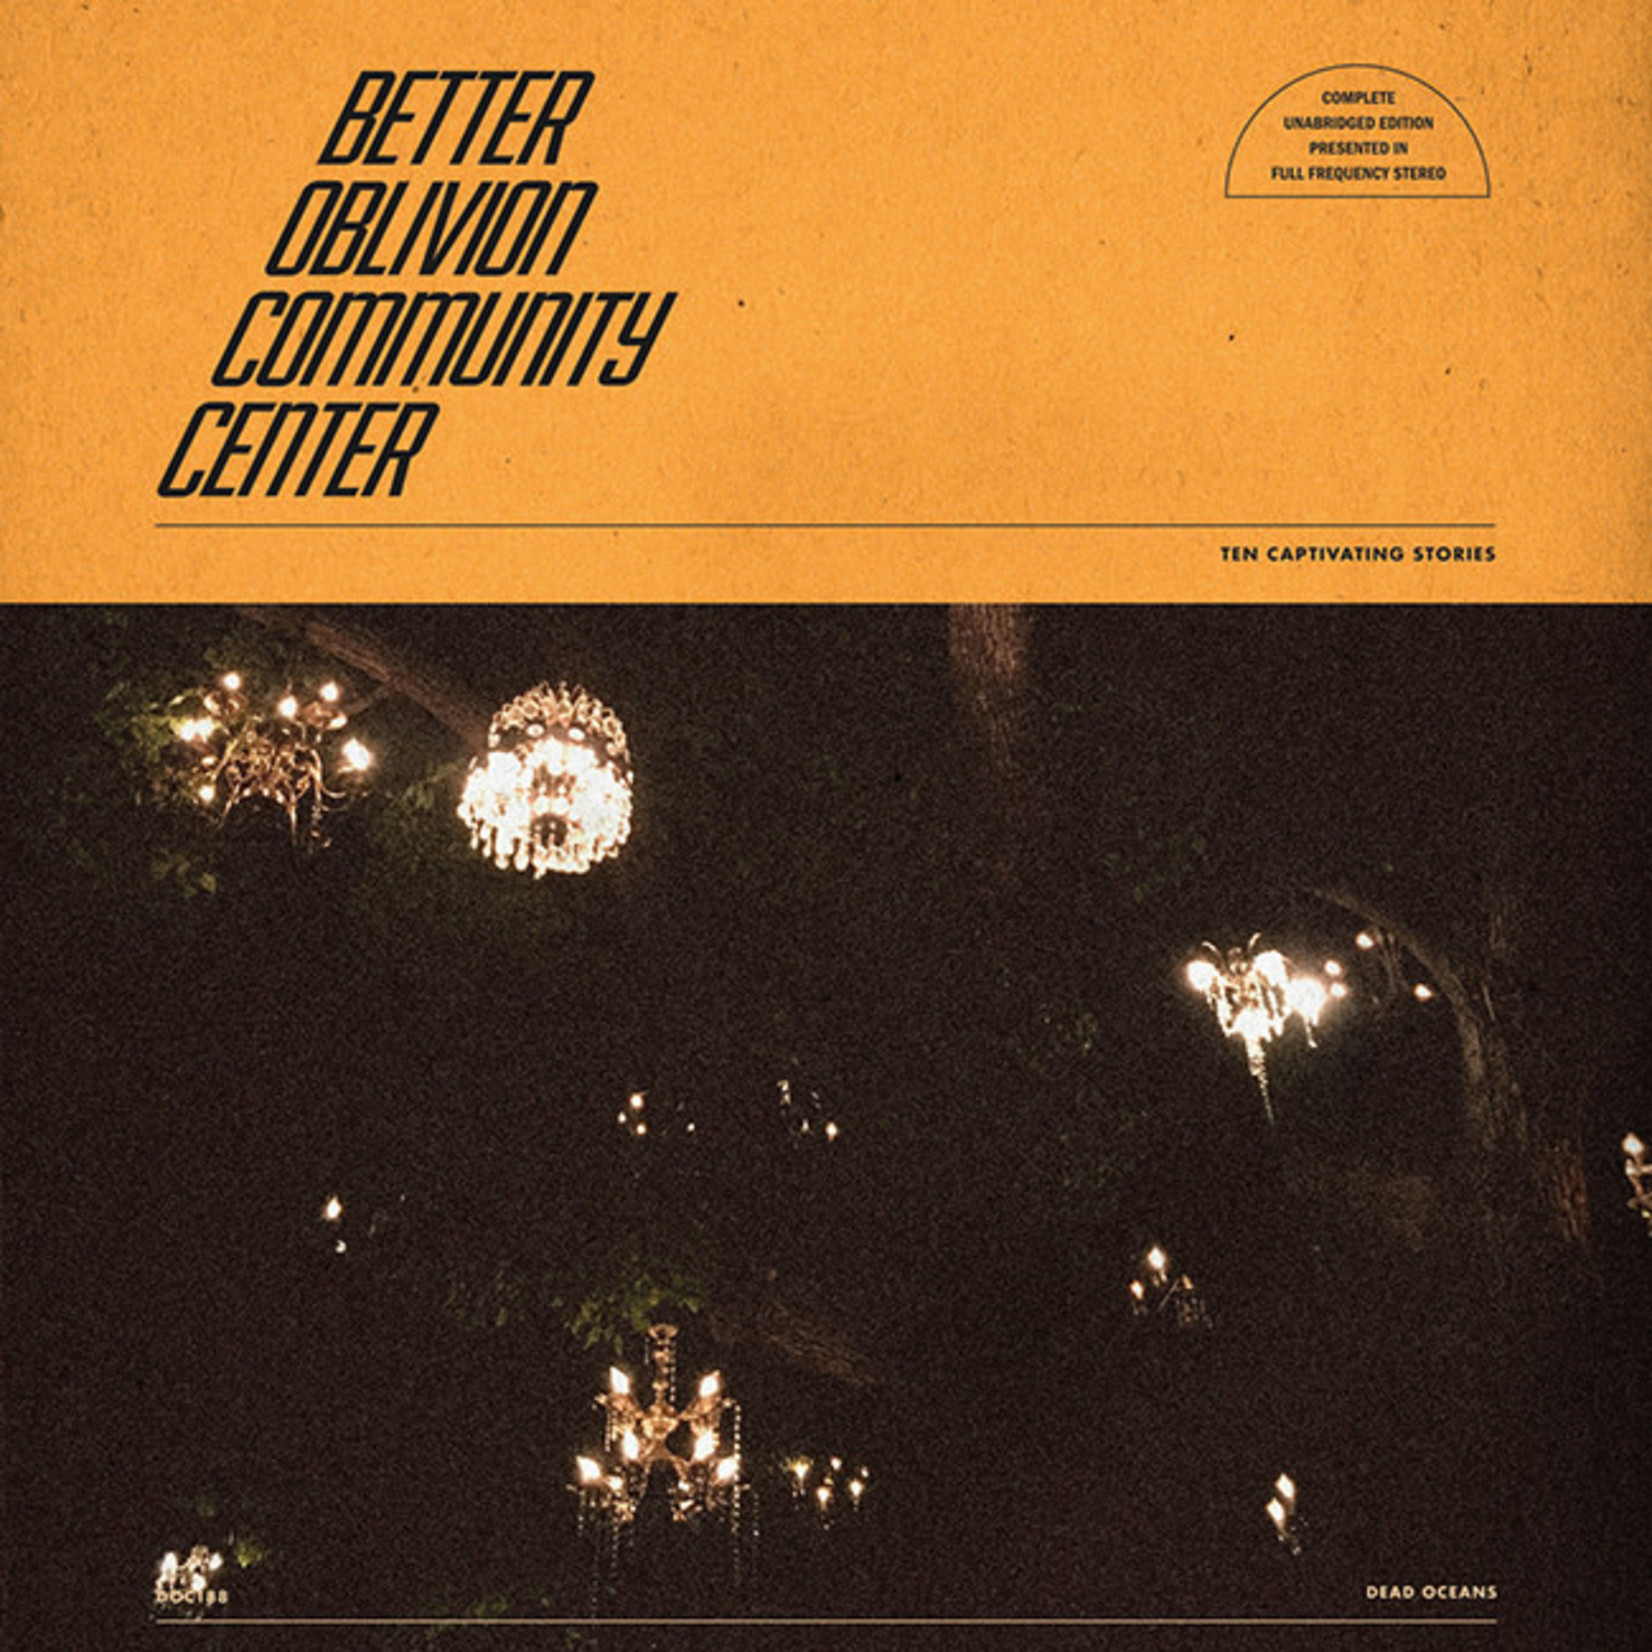 [New] Better Oblivion Community Center (Phoebe Bridgers & Connor Oberst) - self-titled